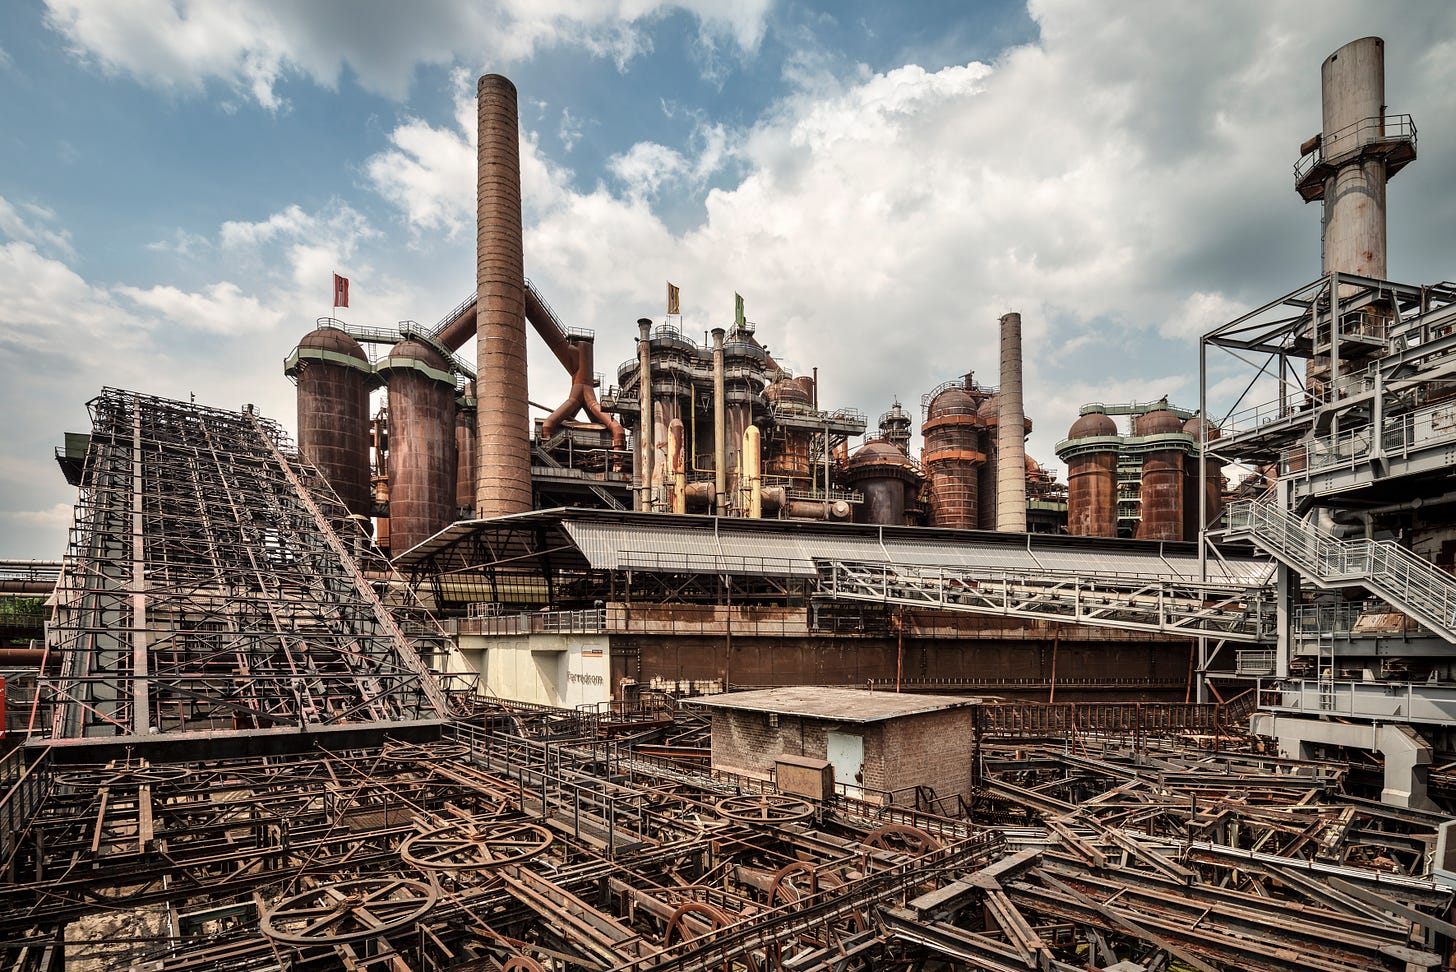 An iron steelworks against a cloudy sky